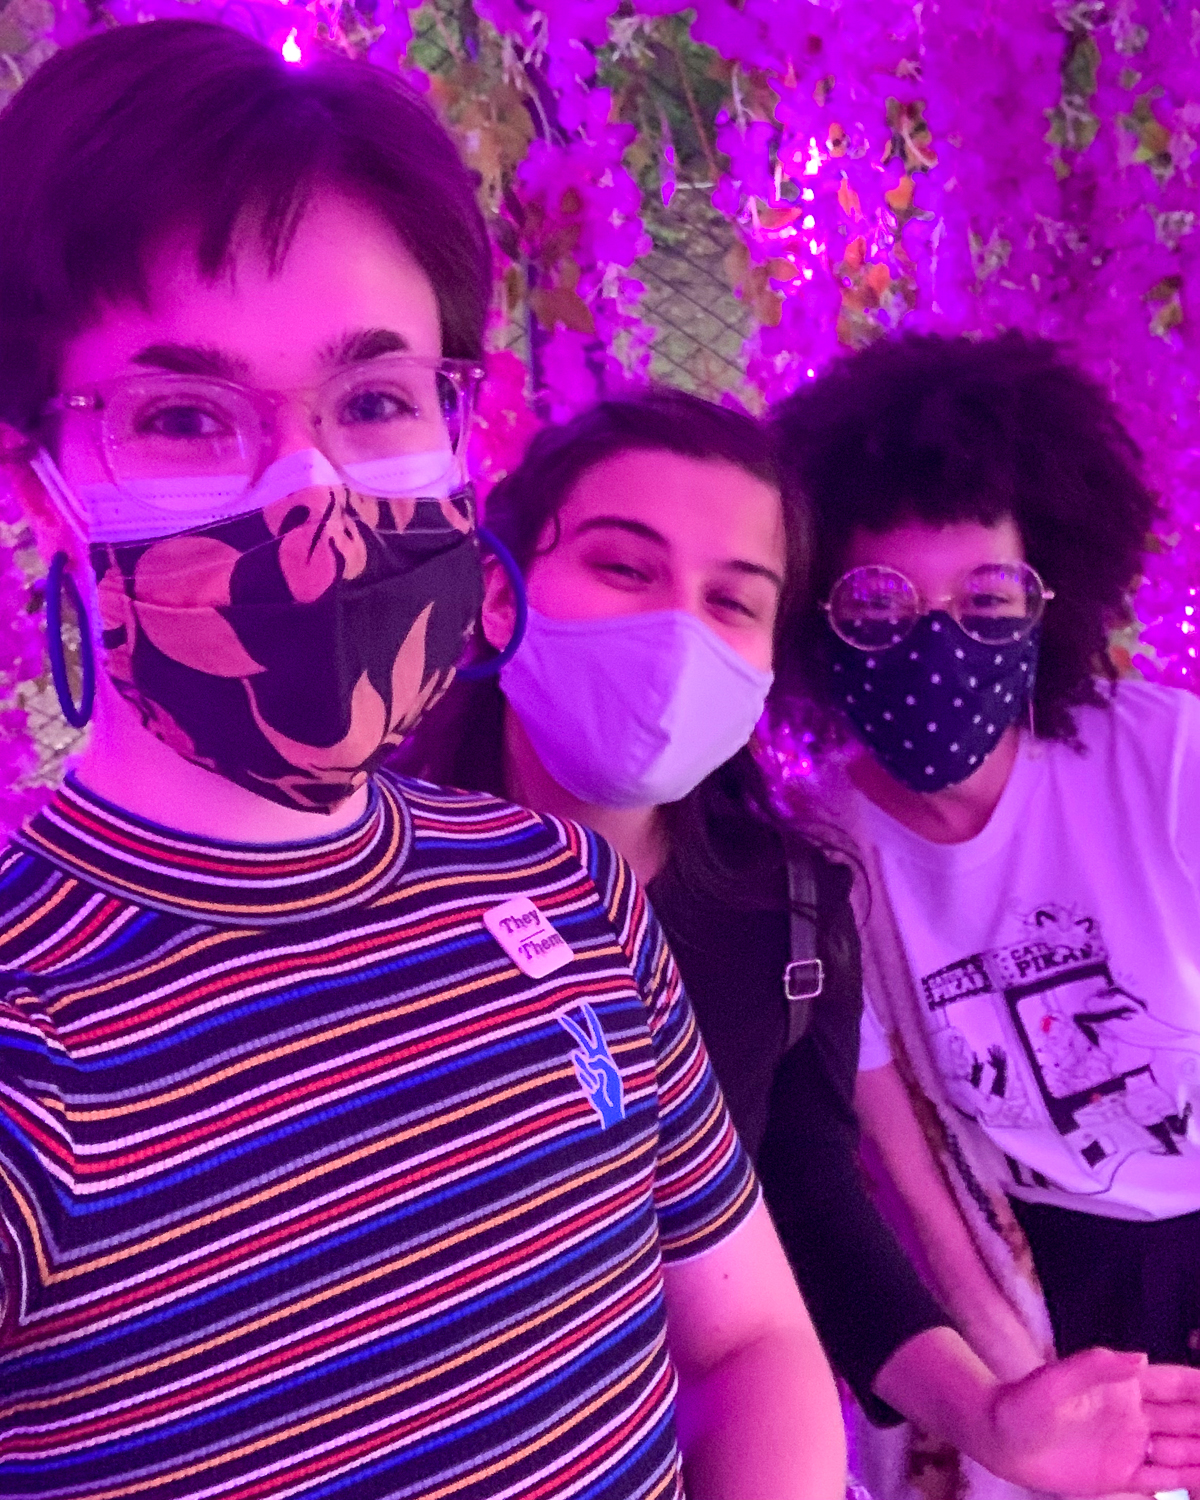 Three people wearing masks, pink light